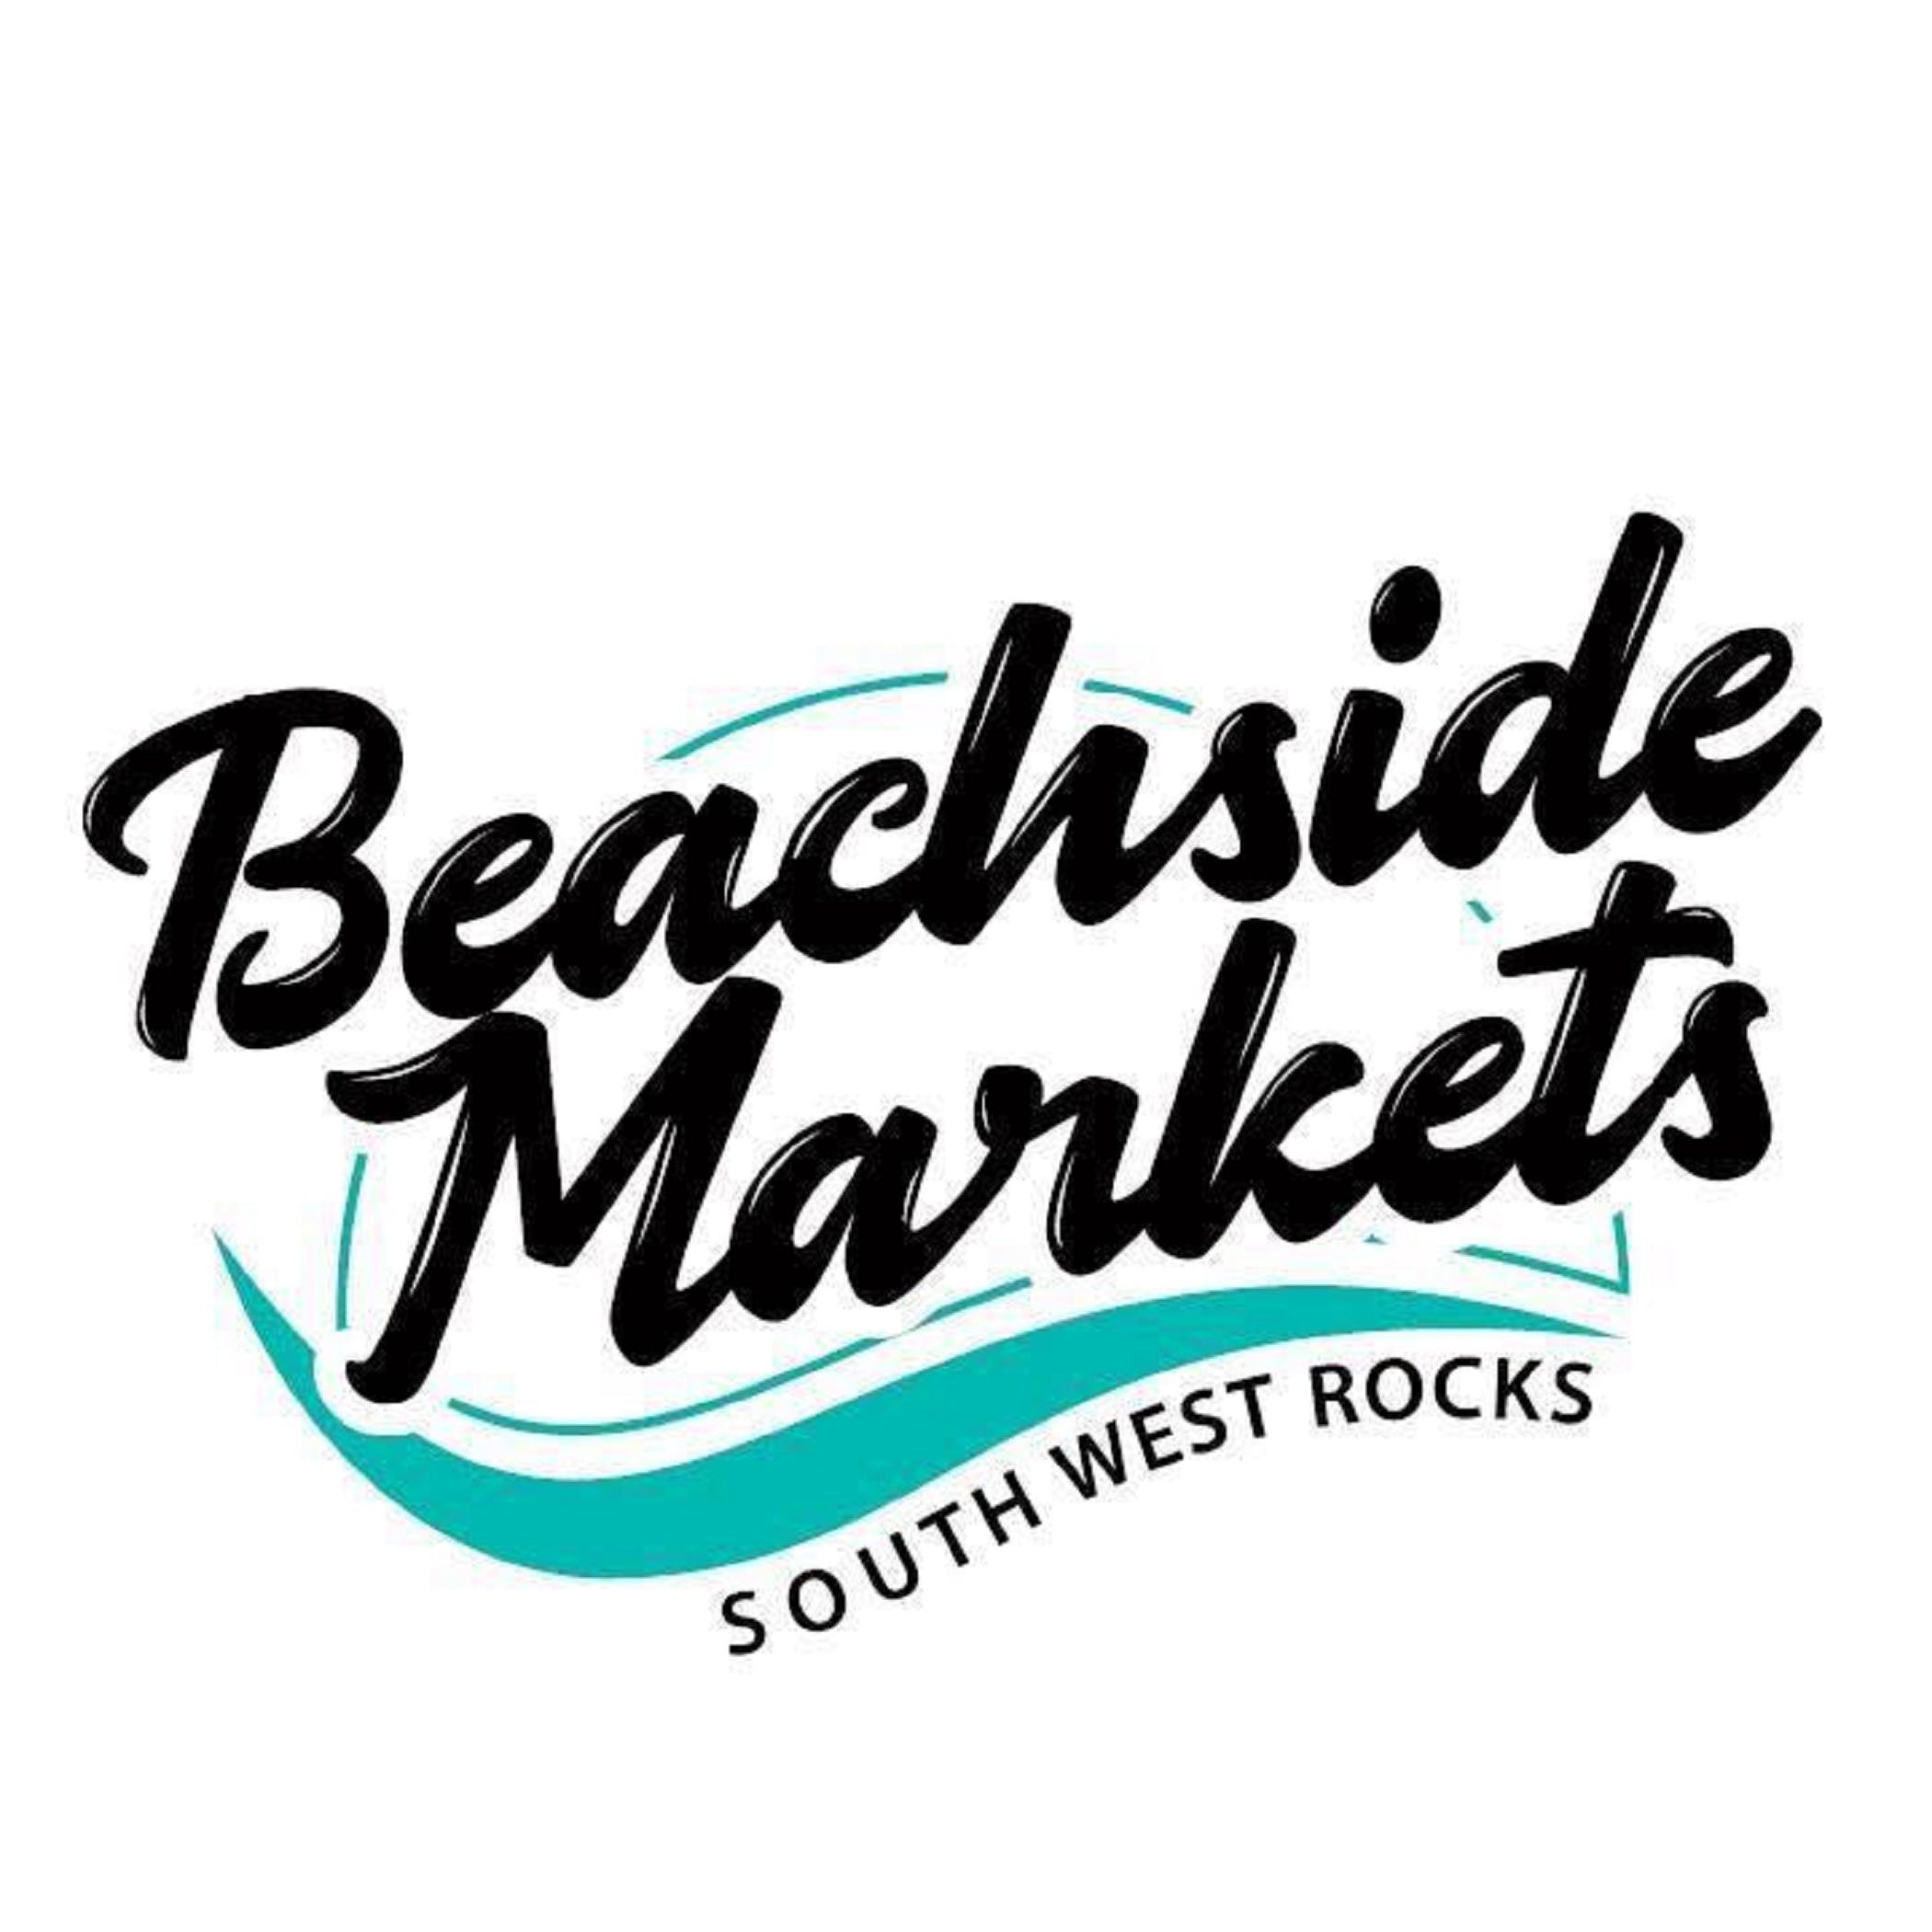 Beachside Markets South West Rocks - Great Ocean Road Tourism